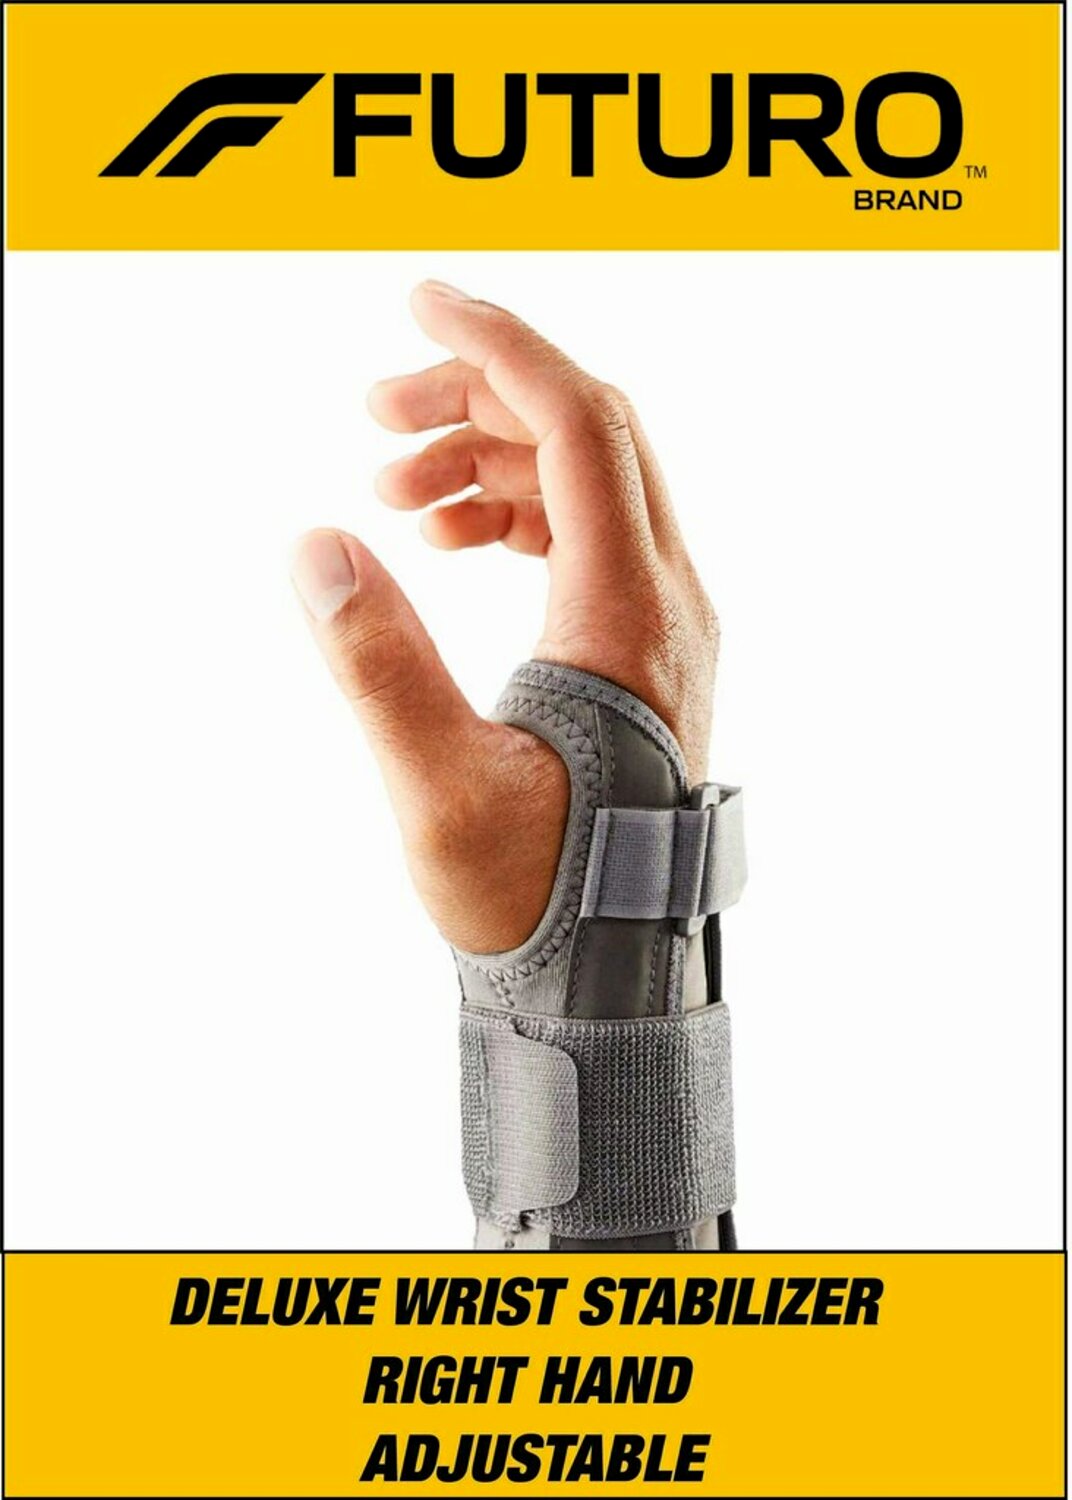 7100155845 - FUTURO Deluxe Wrist Stabilizer Right Hand, 09013ENR, Adjustable, Grey